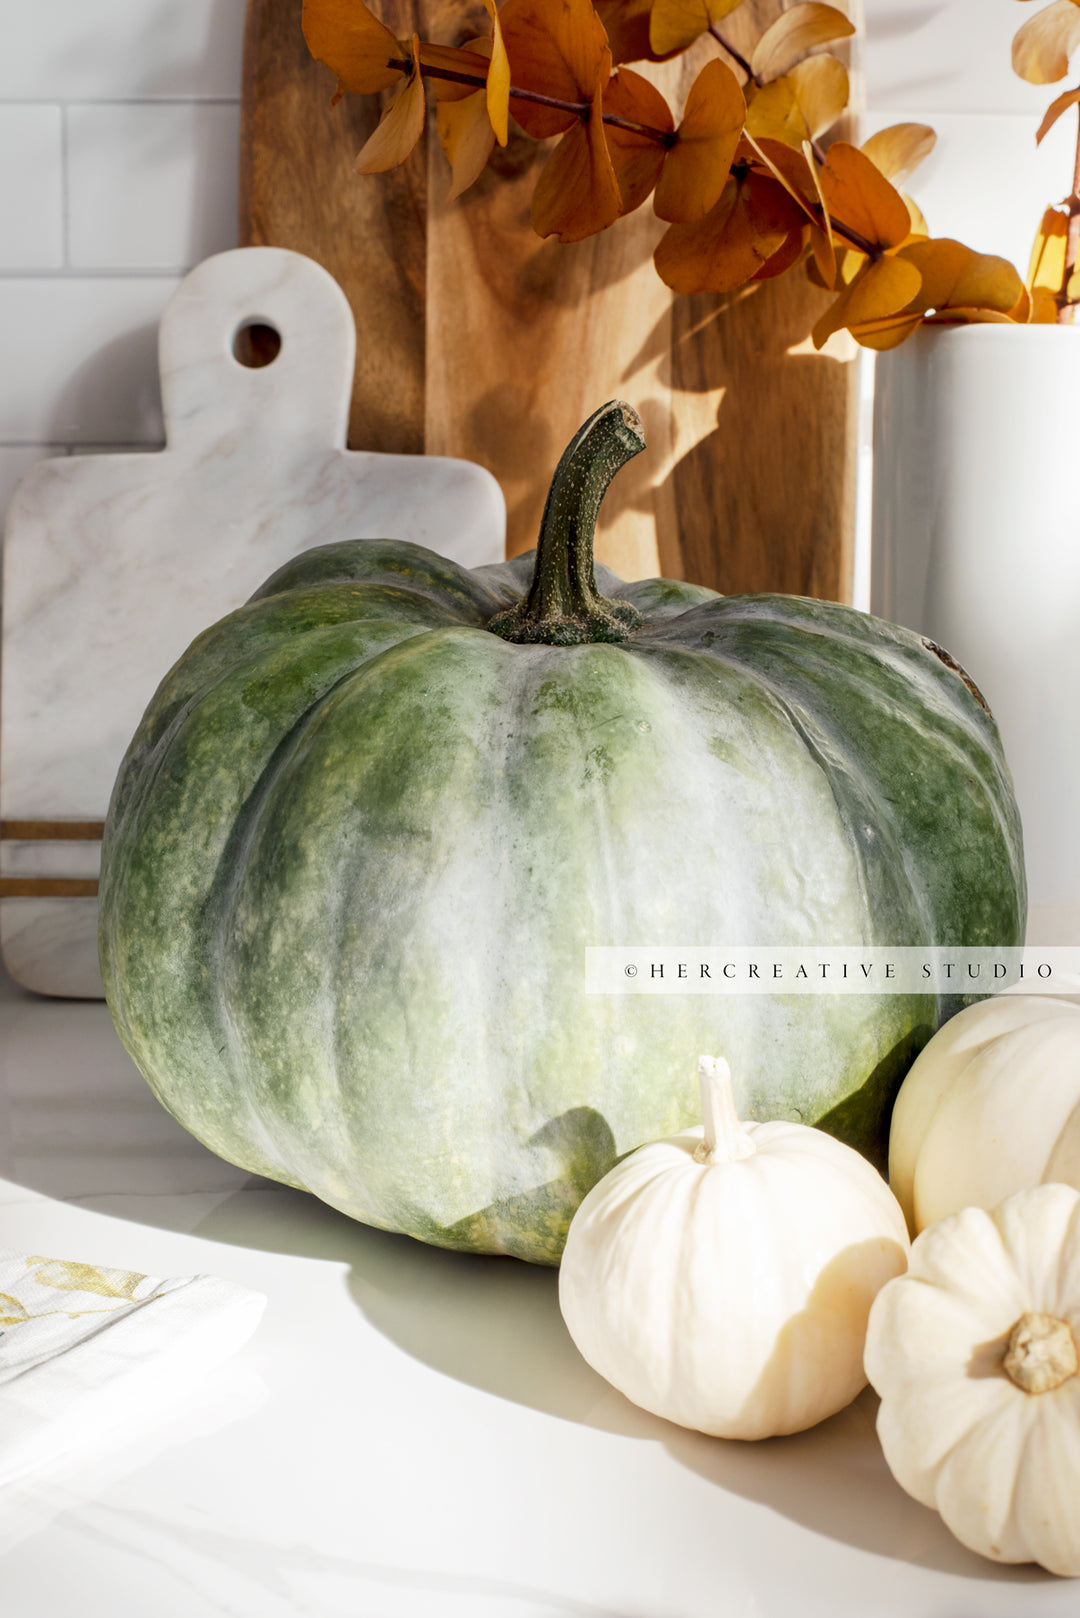 Green & White Pumpkins in Kitchen. Digital Stock Image.